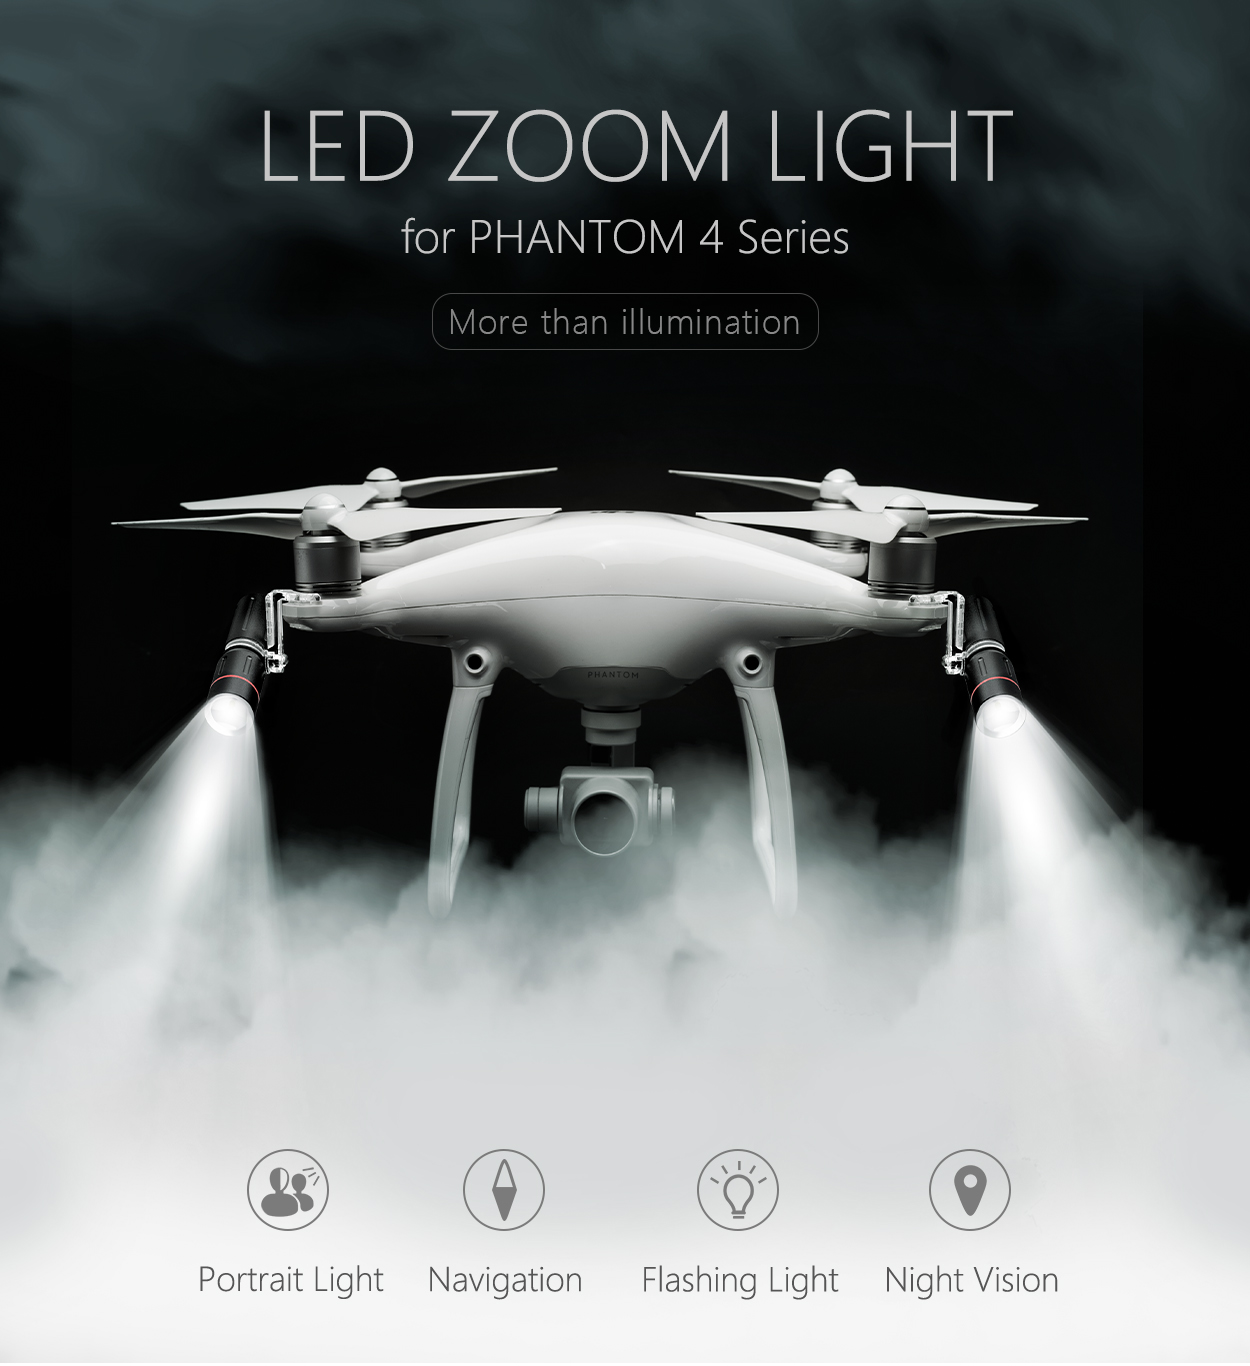 Zoom Lights for PHANTOM 4 Series